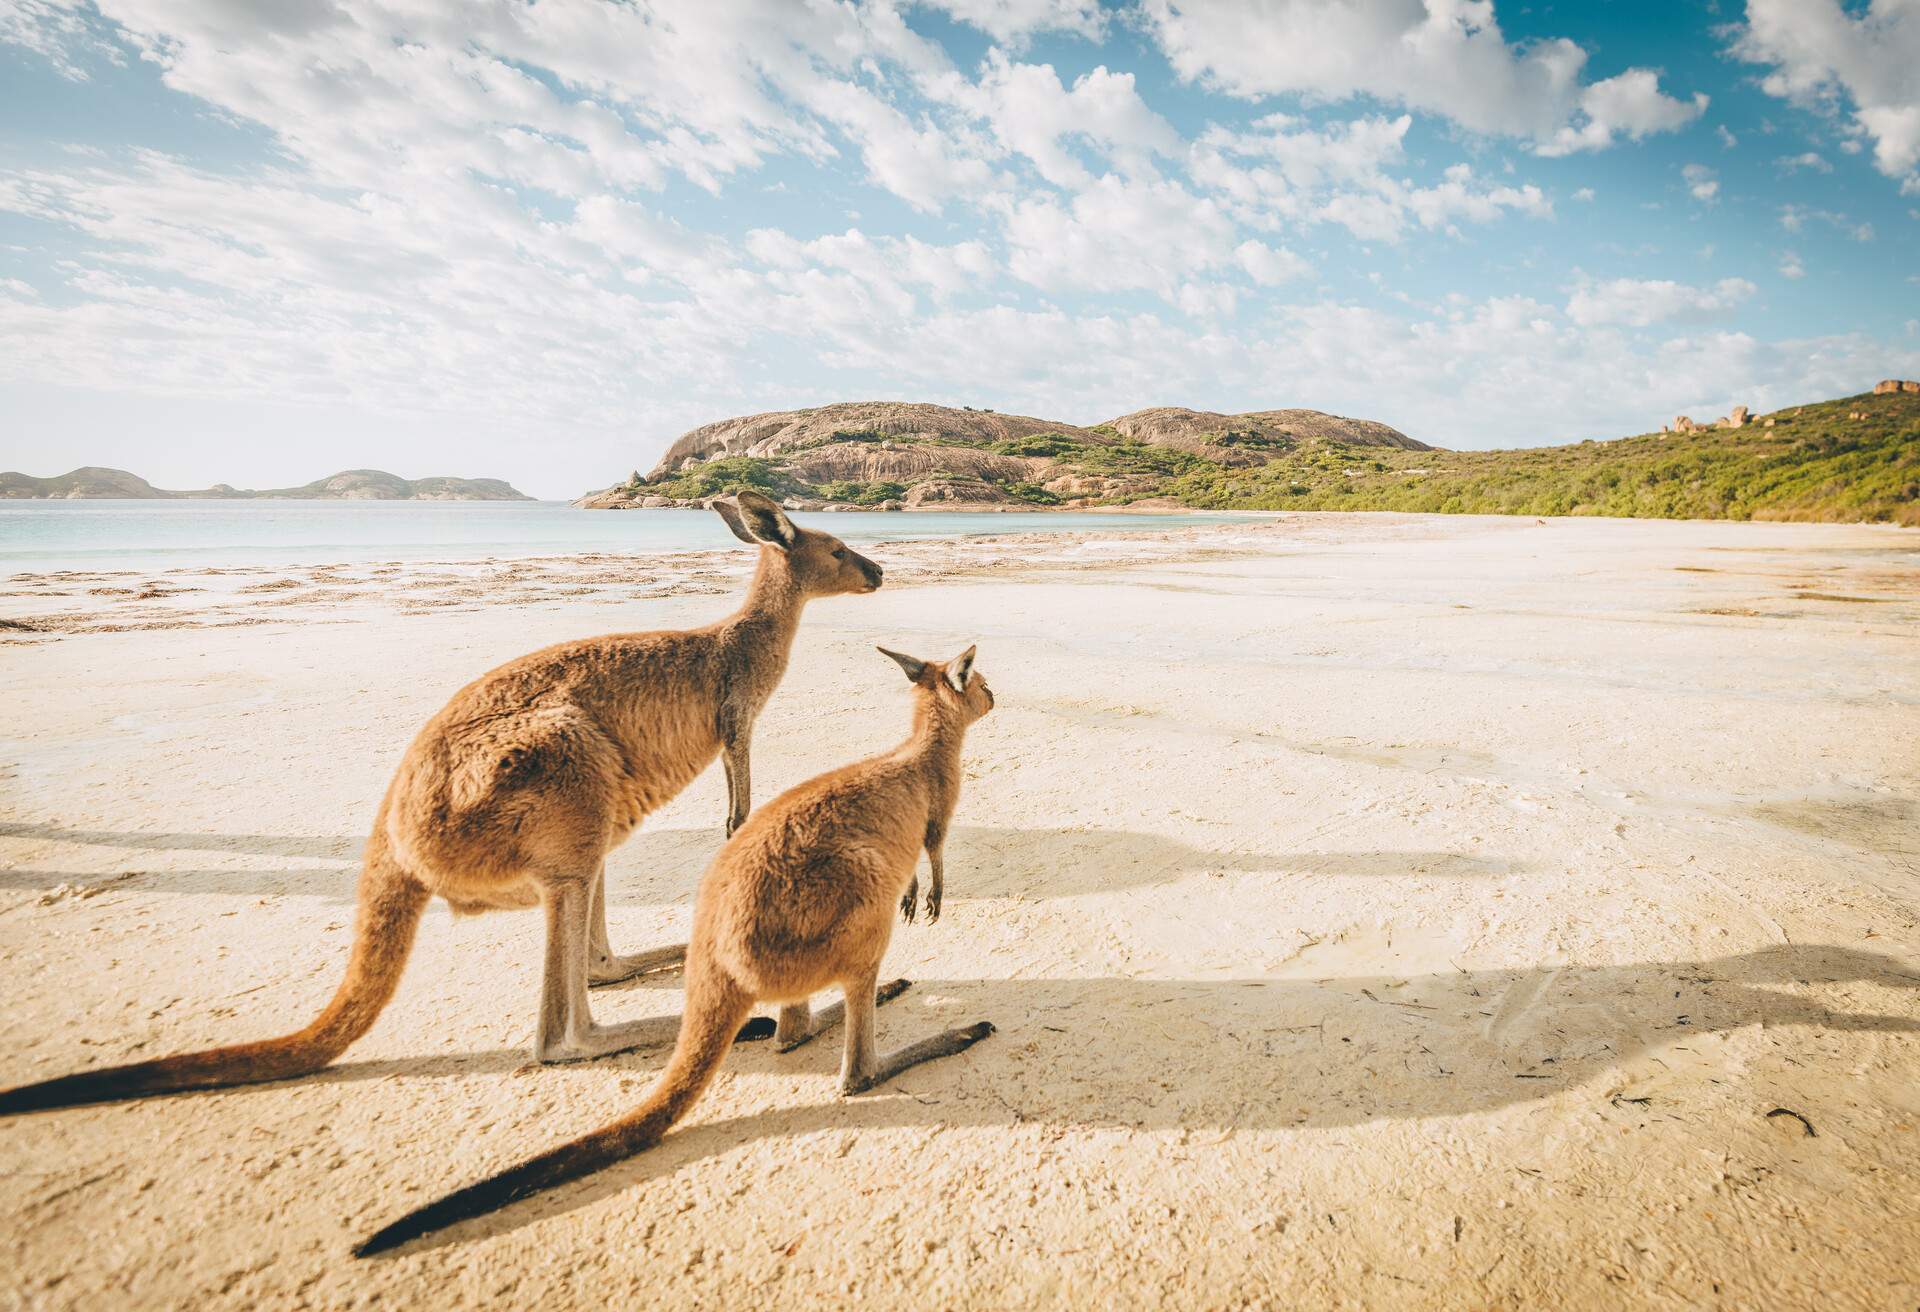 A weird and wonderful account of Australian animals - KAYAK